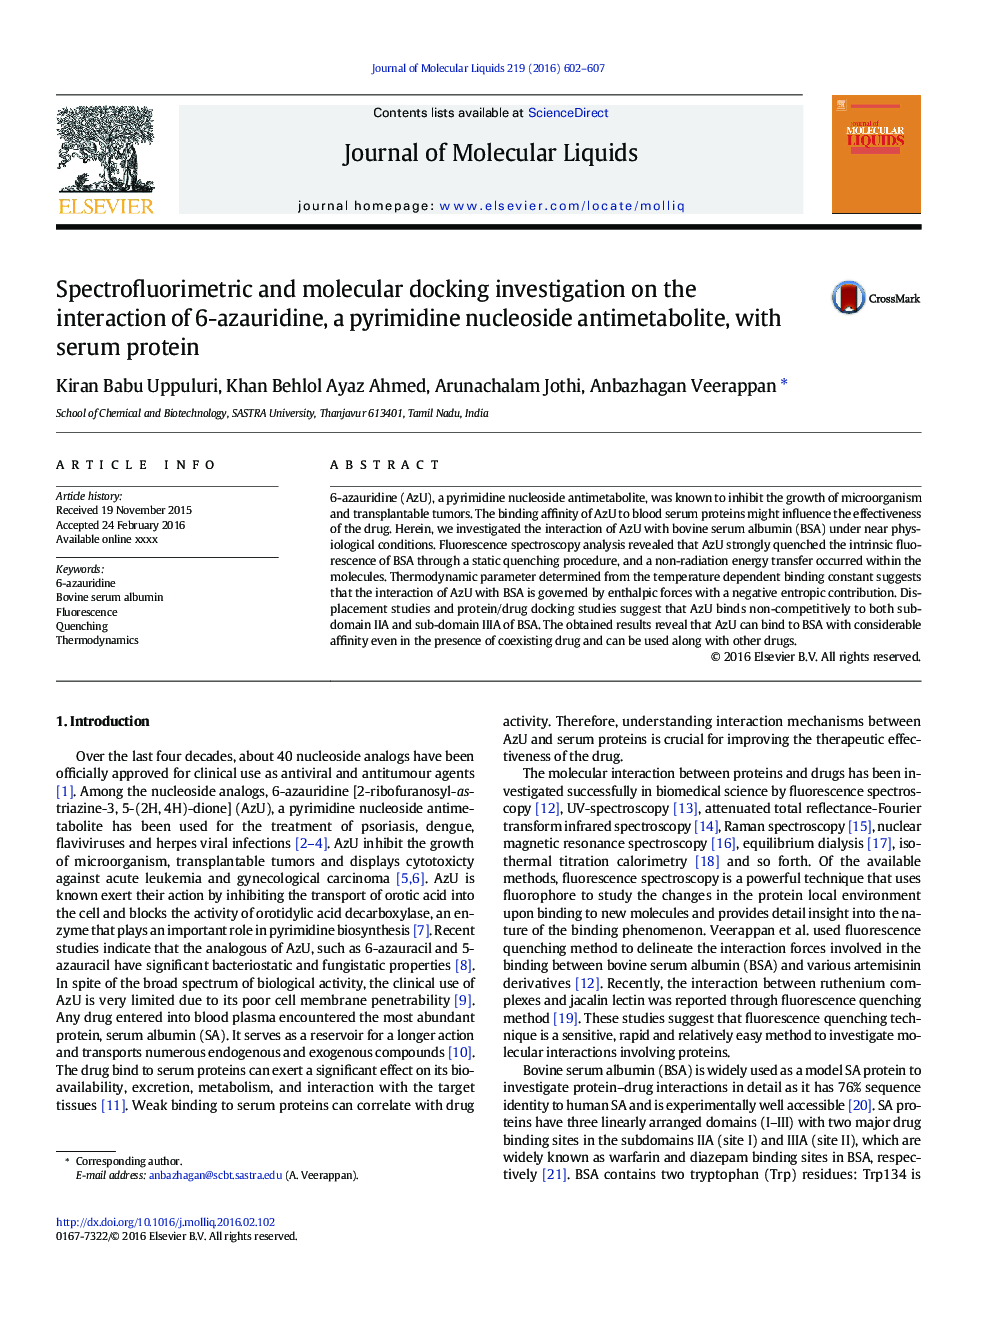 Spectrofluorimetric and molecular docking investigation on the interaction of 6-azauridine, a pyrimidine nucleoside antimetabolite, with serum protein